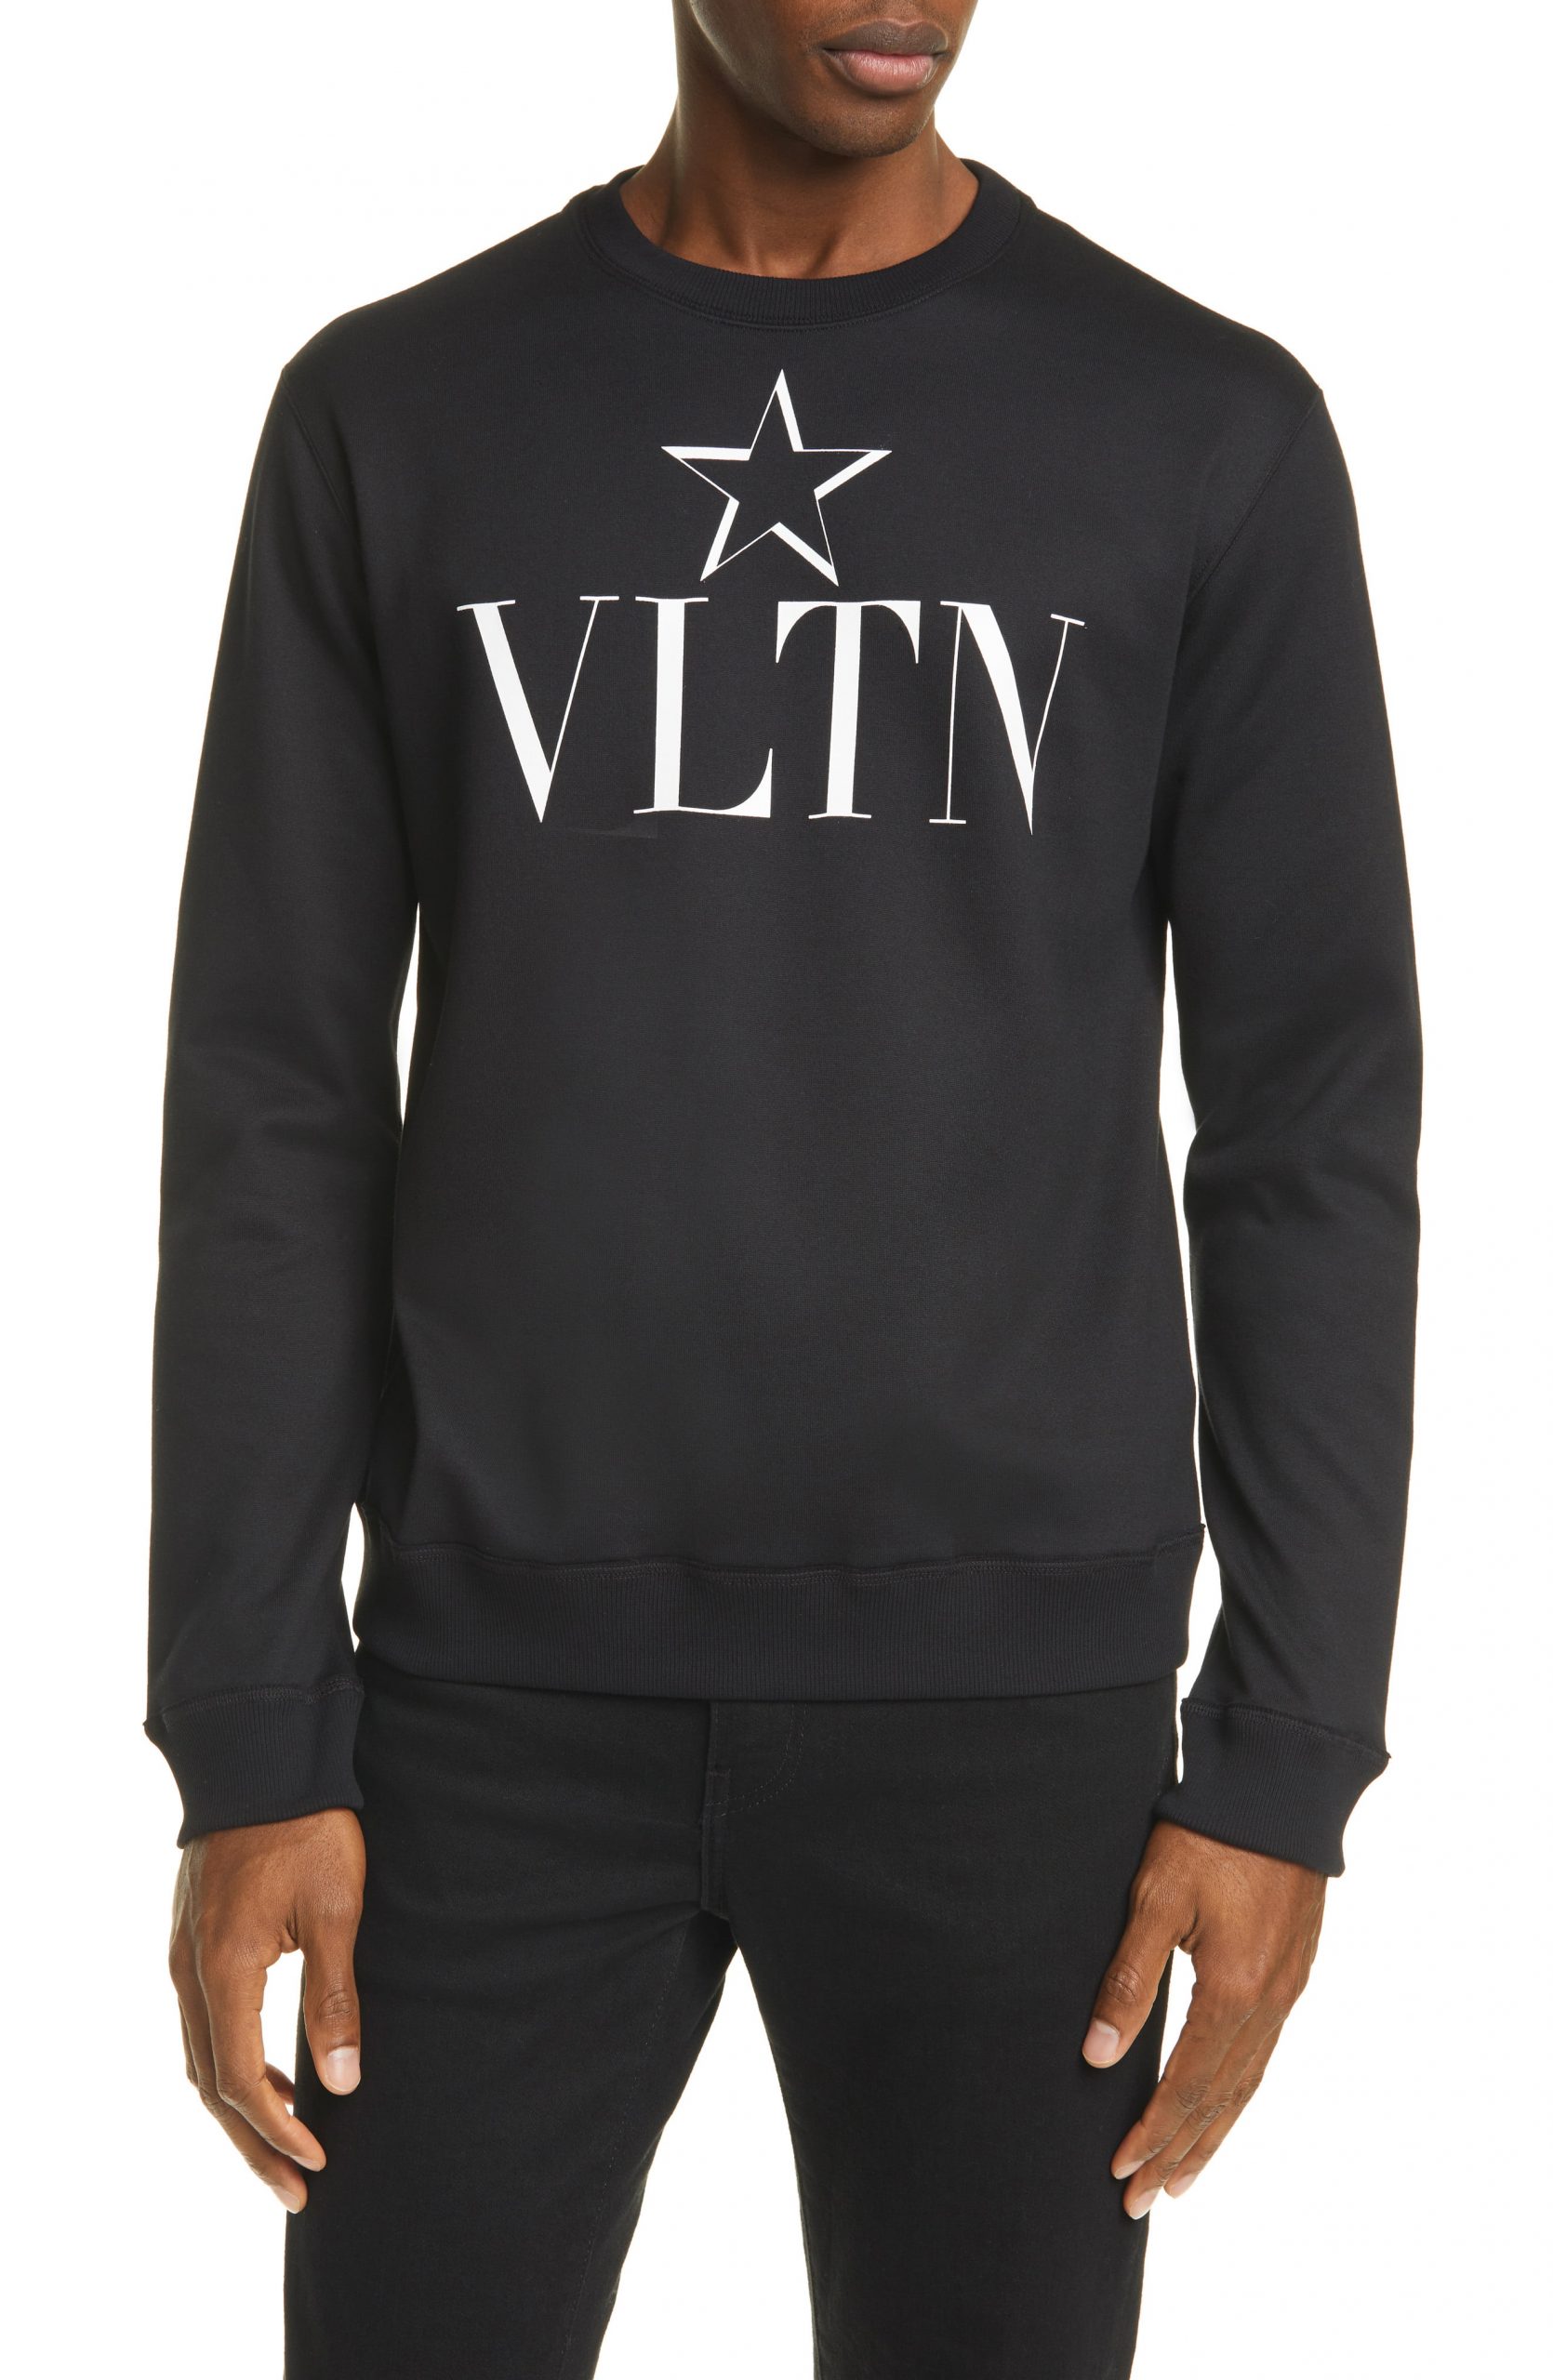 Men’s Valentino Vltnstar Jersey Sweatshirt, Size Small - Black | The